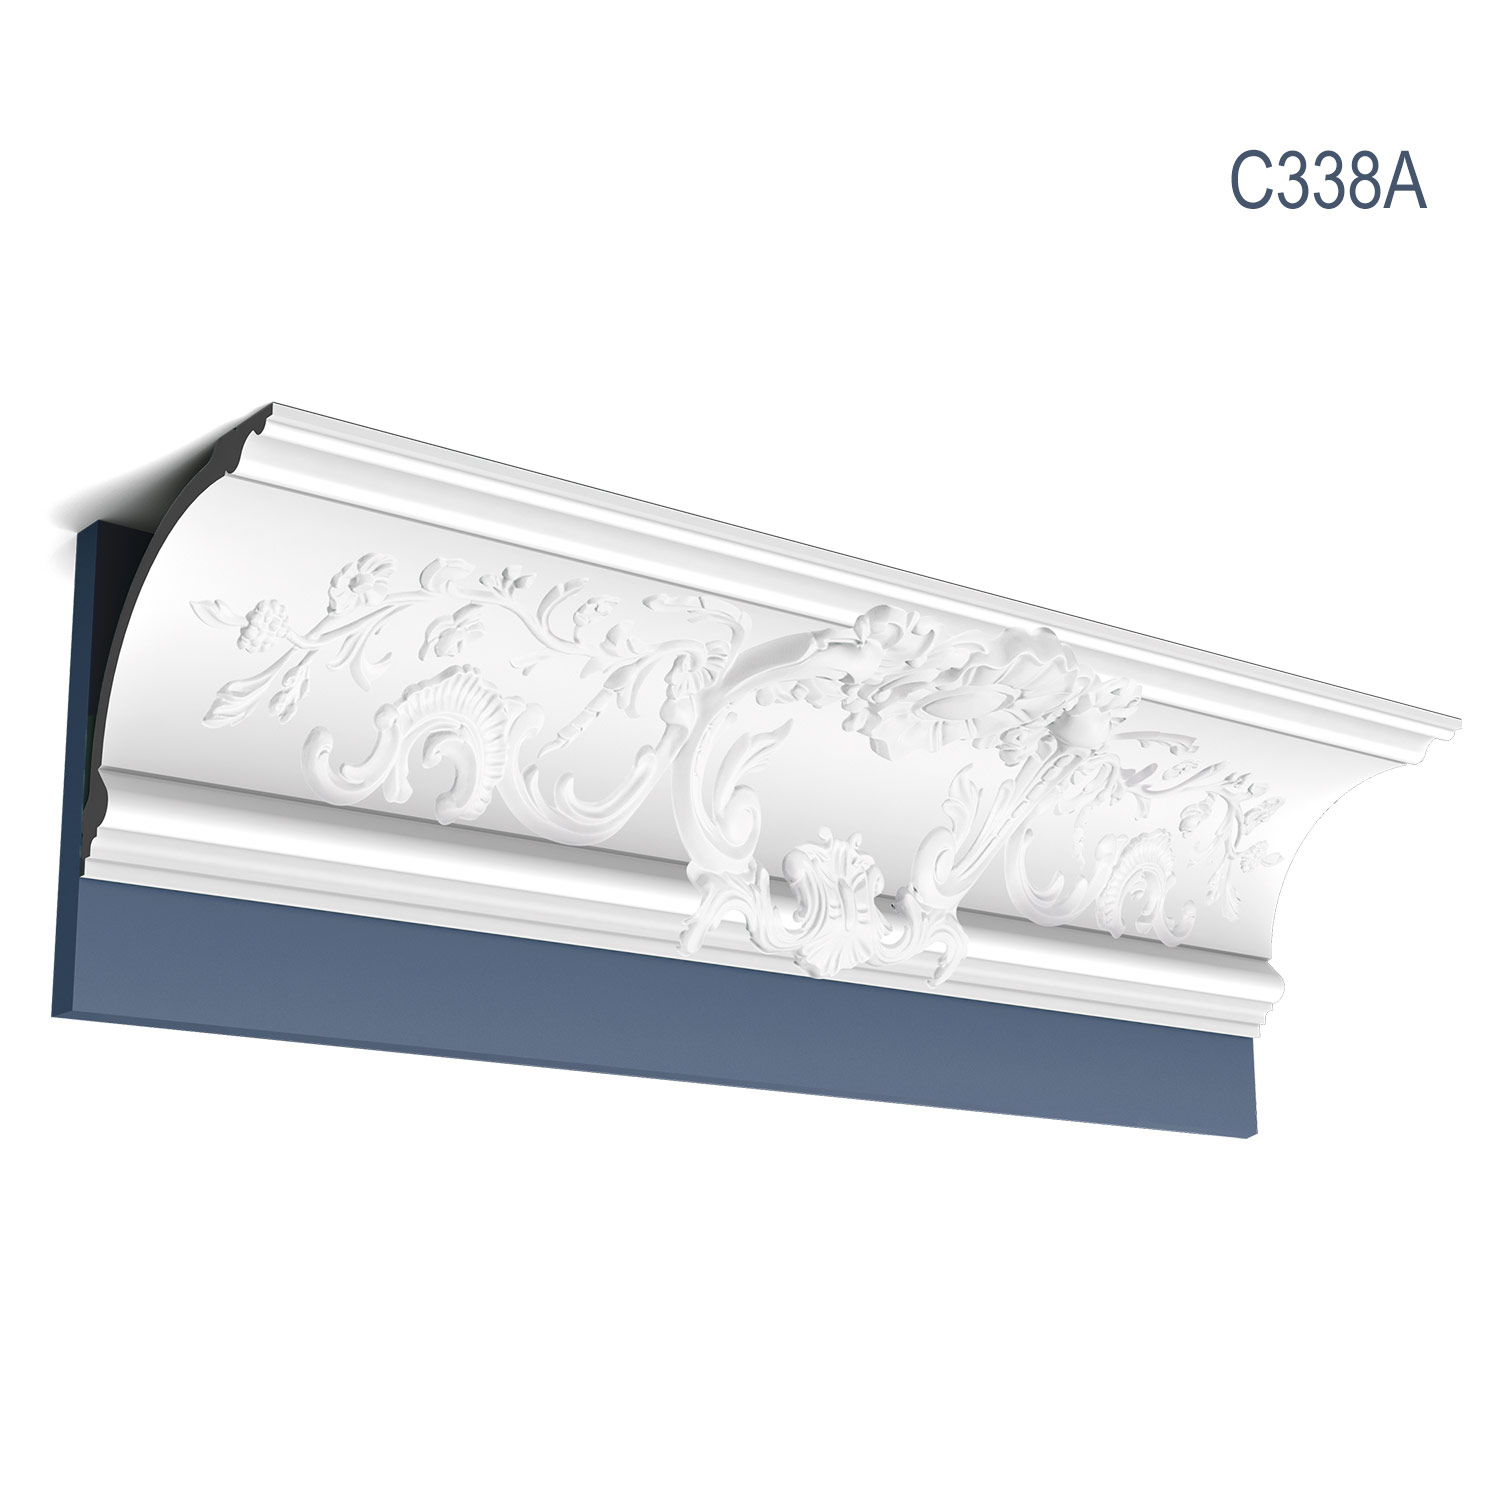 Cornisa Luxxus C338A, Dimensiuni: 200 X 18.4 X 18.4 cm, Orac Decor Orac Decor